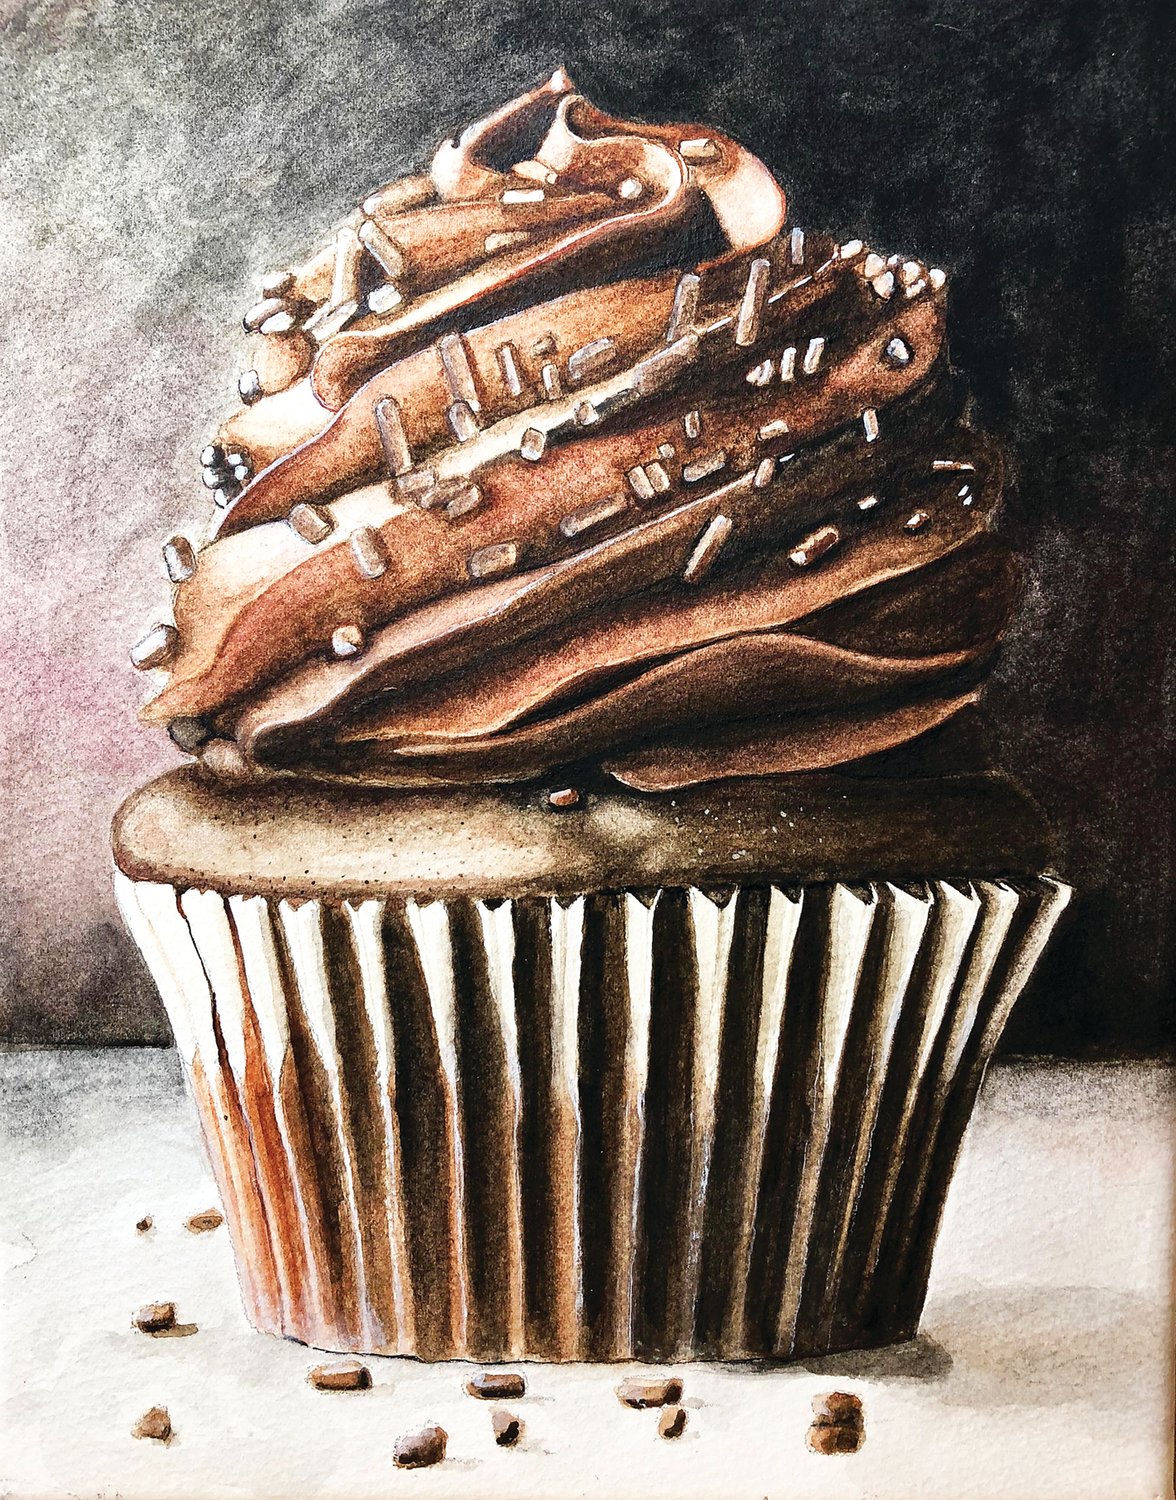 “Cupcake” is by watercolorist Carol Corbett.